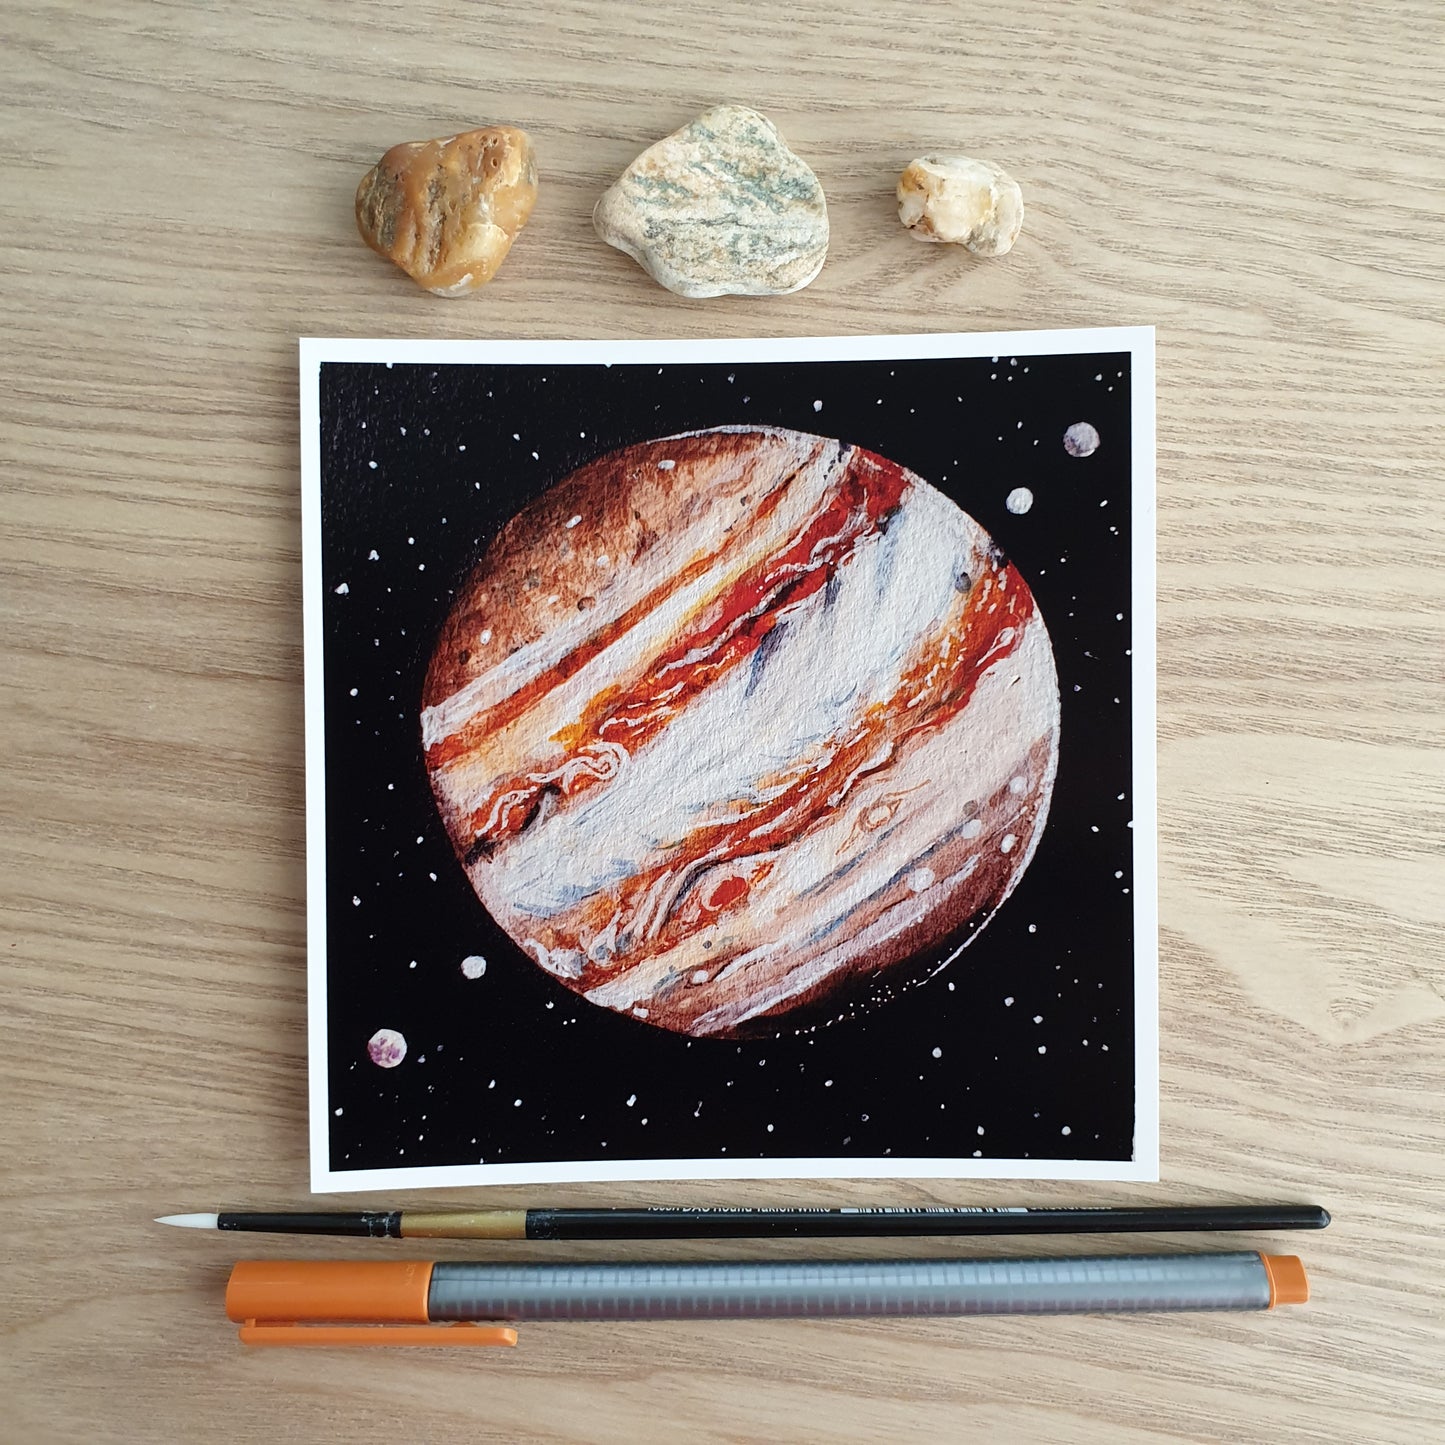 5x5 inch Glossy Print - Jupiter